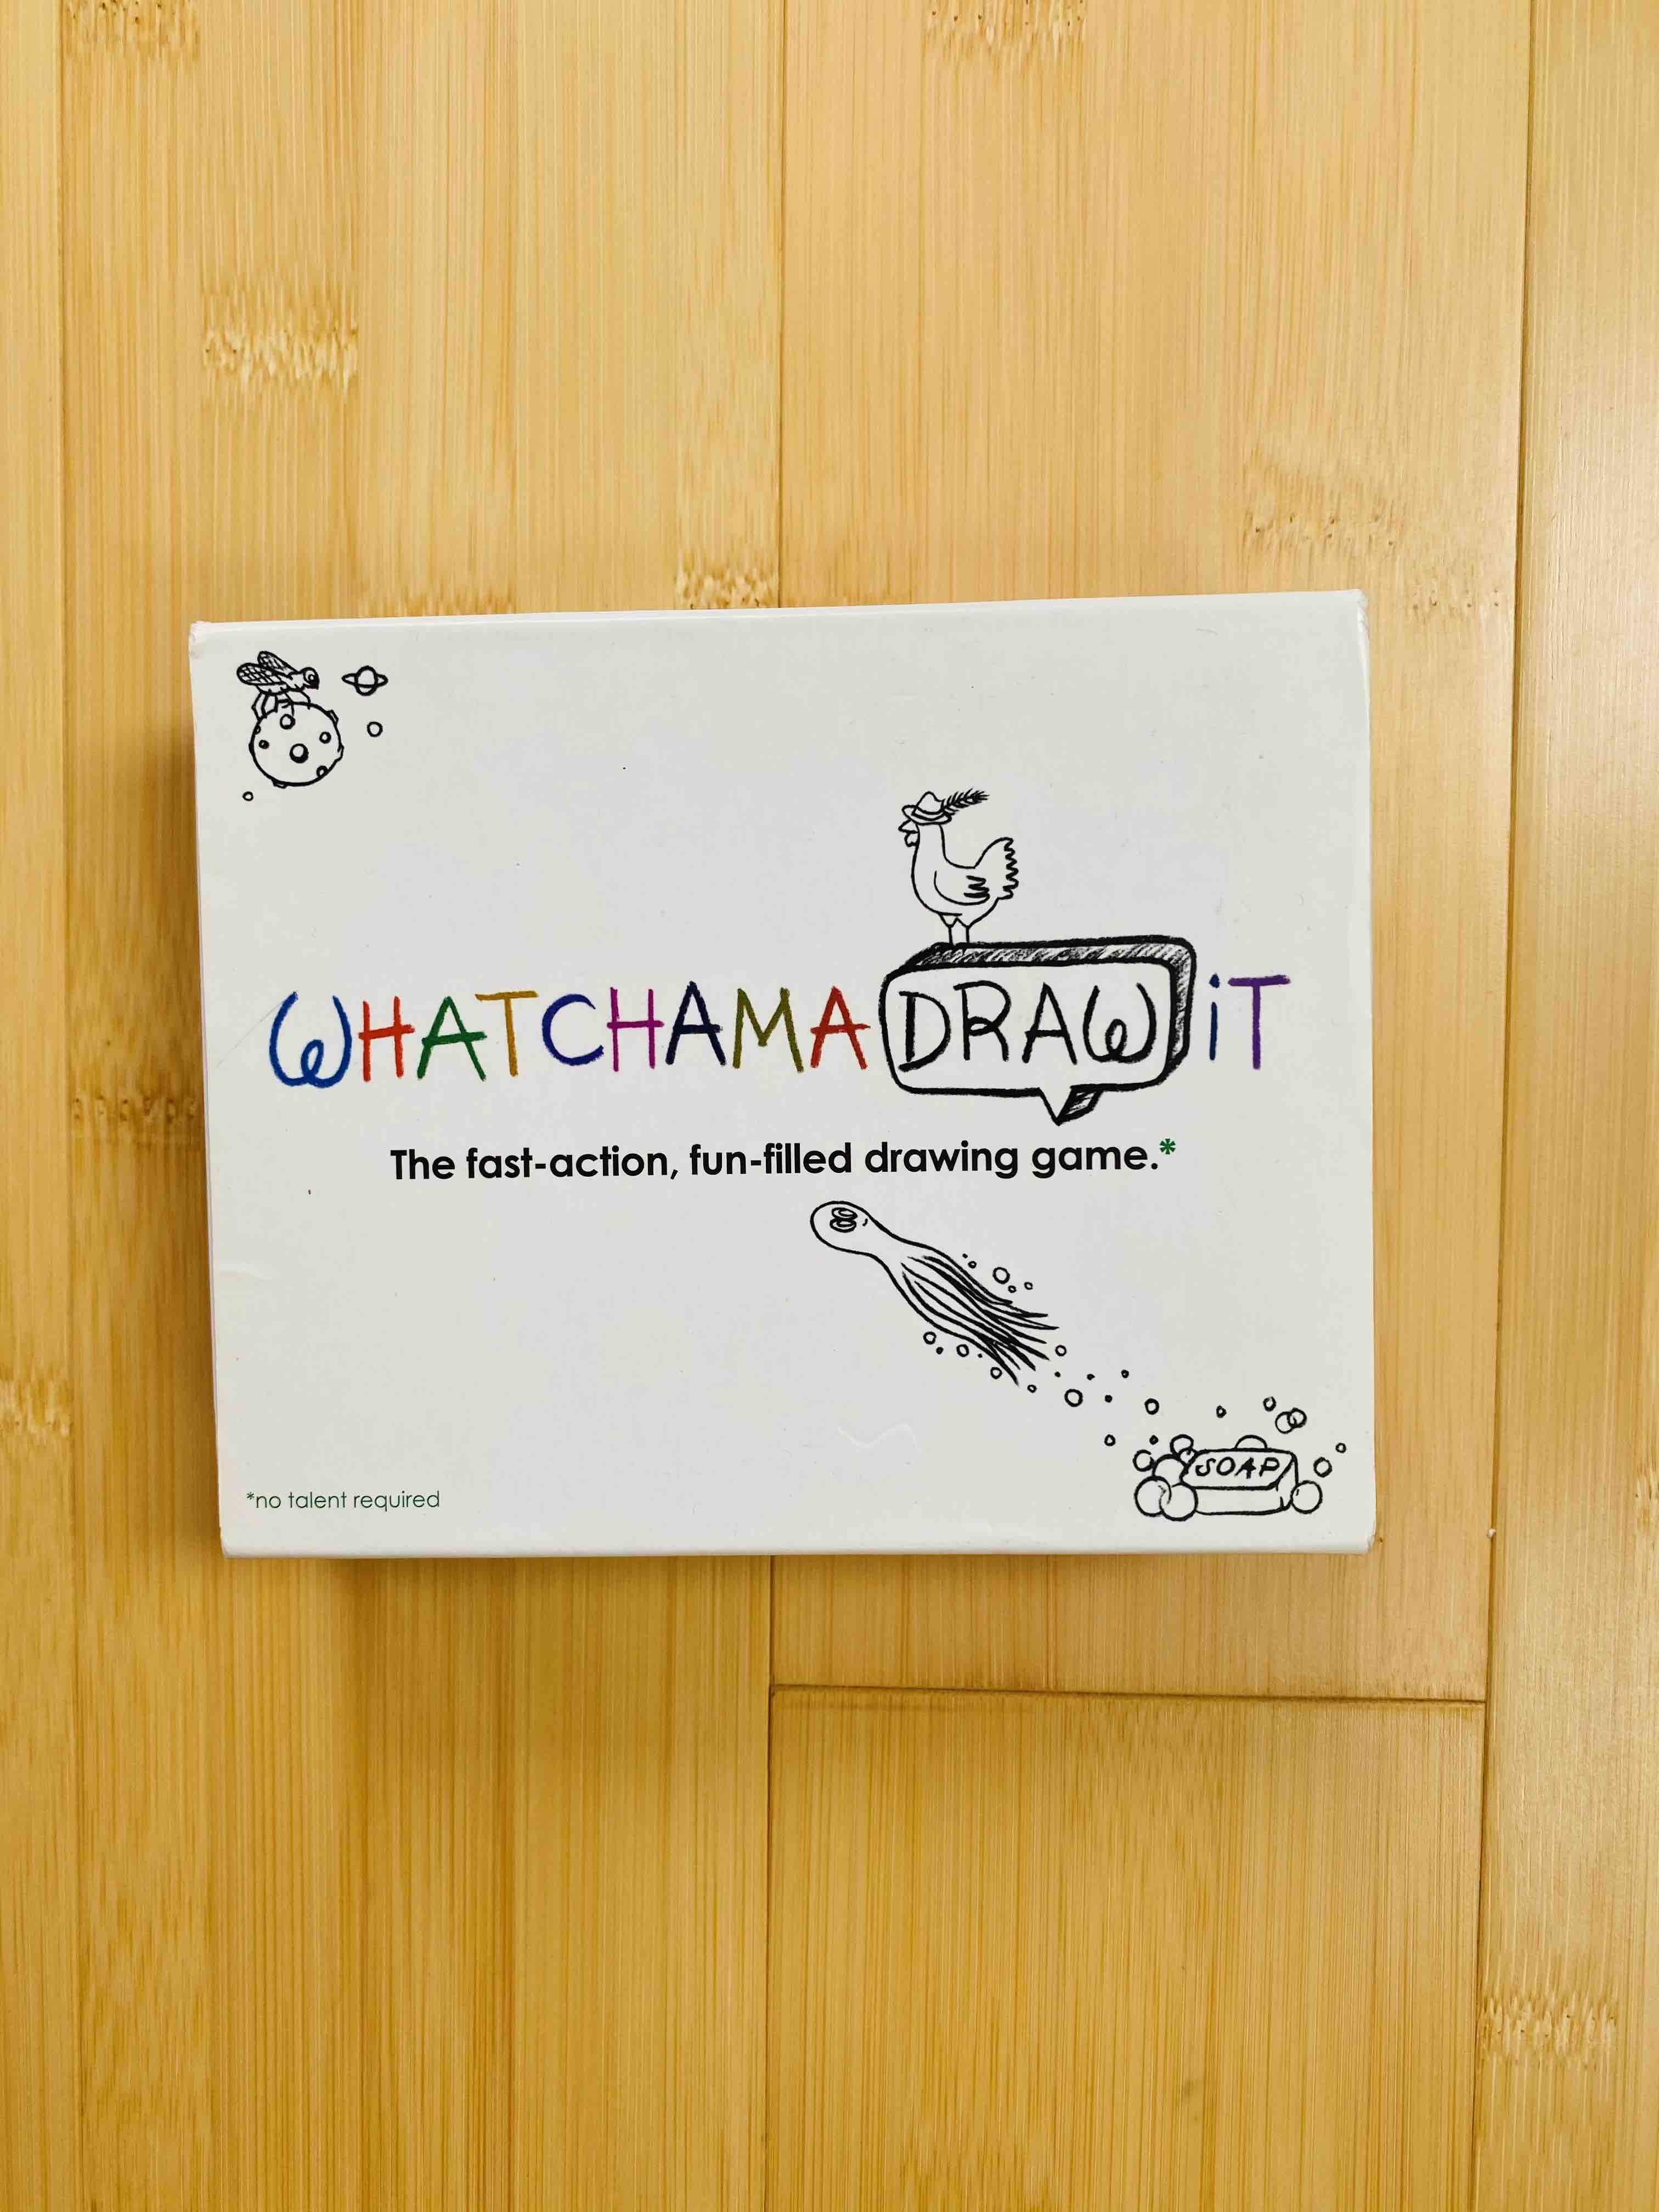 Games whatchamadrawit